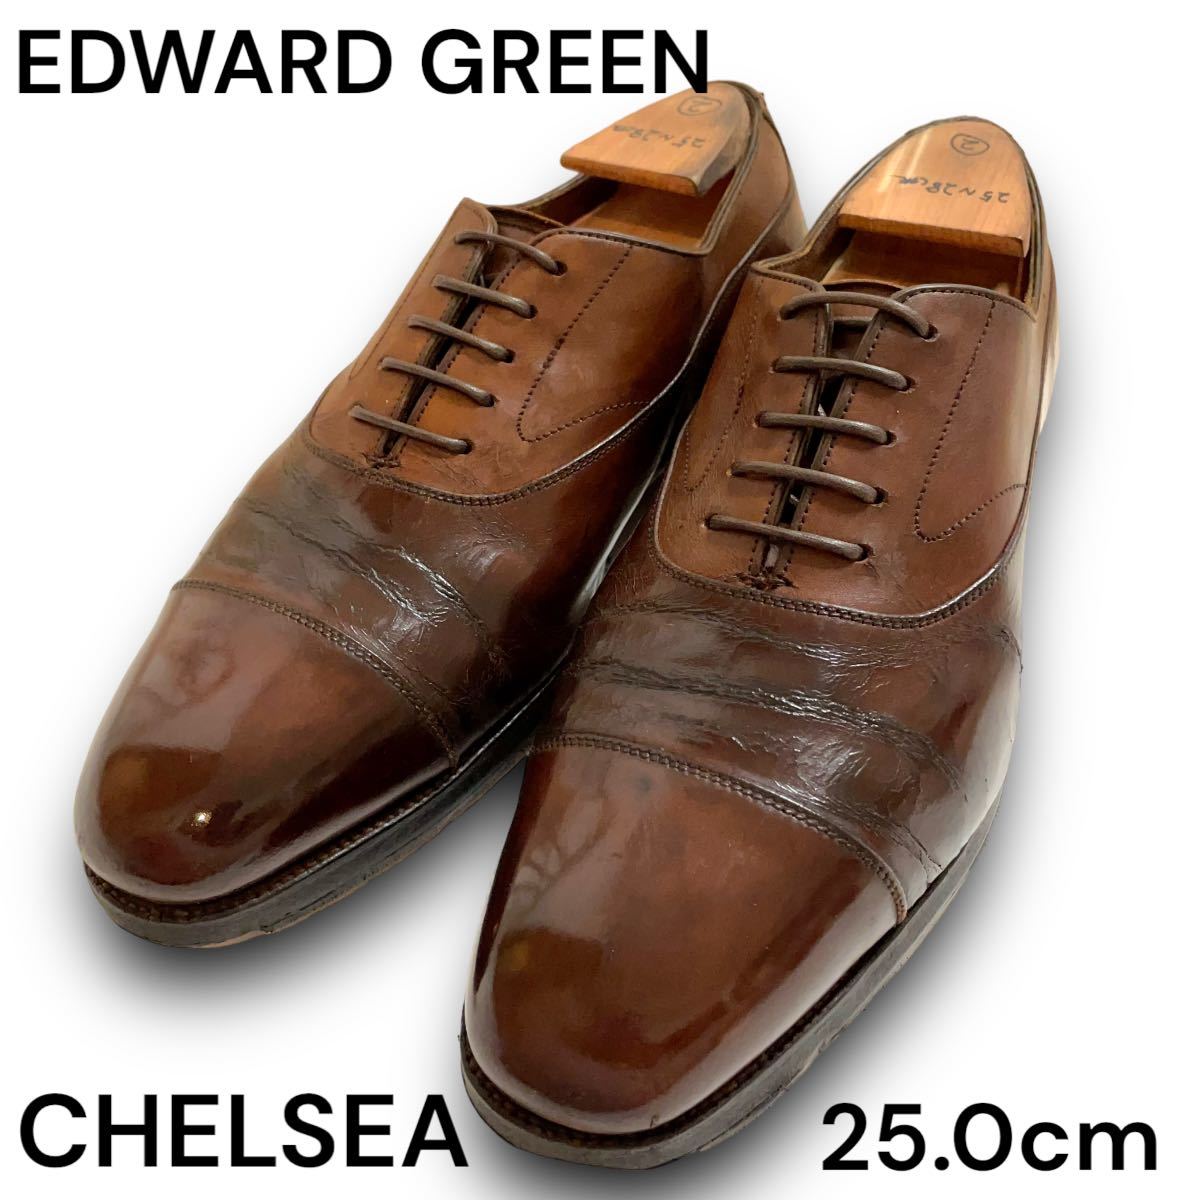 EDWARD GREEN CHELSEA エドワードグリーン チェルシー UK6.5 約25㎝ 808 ラスト ストレートチップ ダークブラウン 革靴 紳士靴